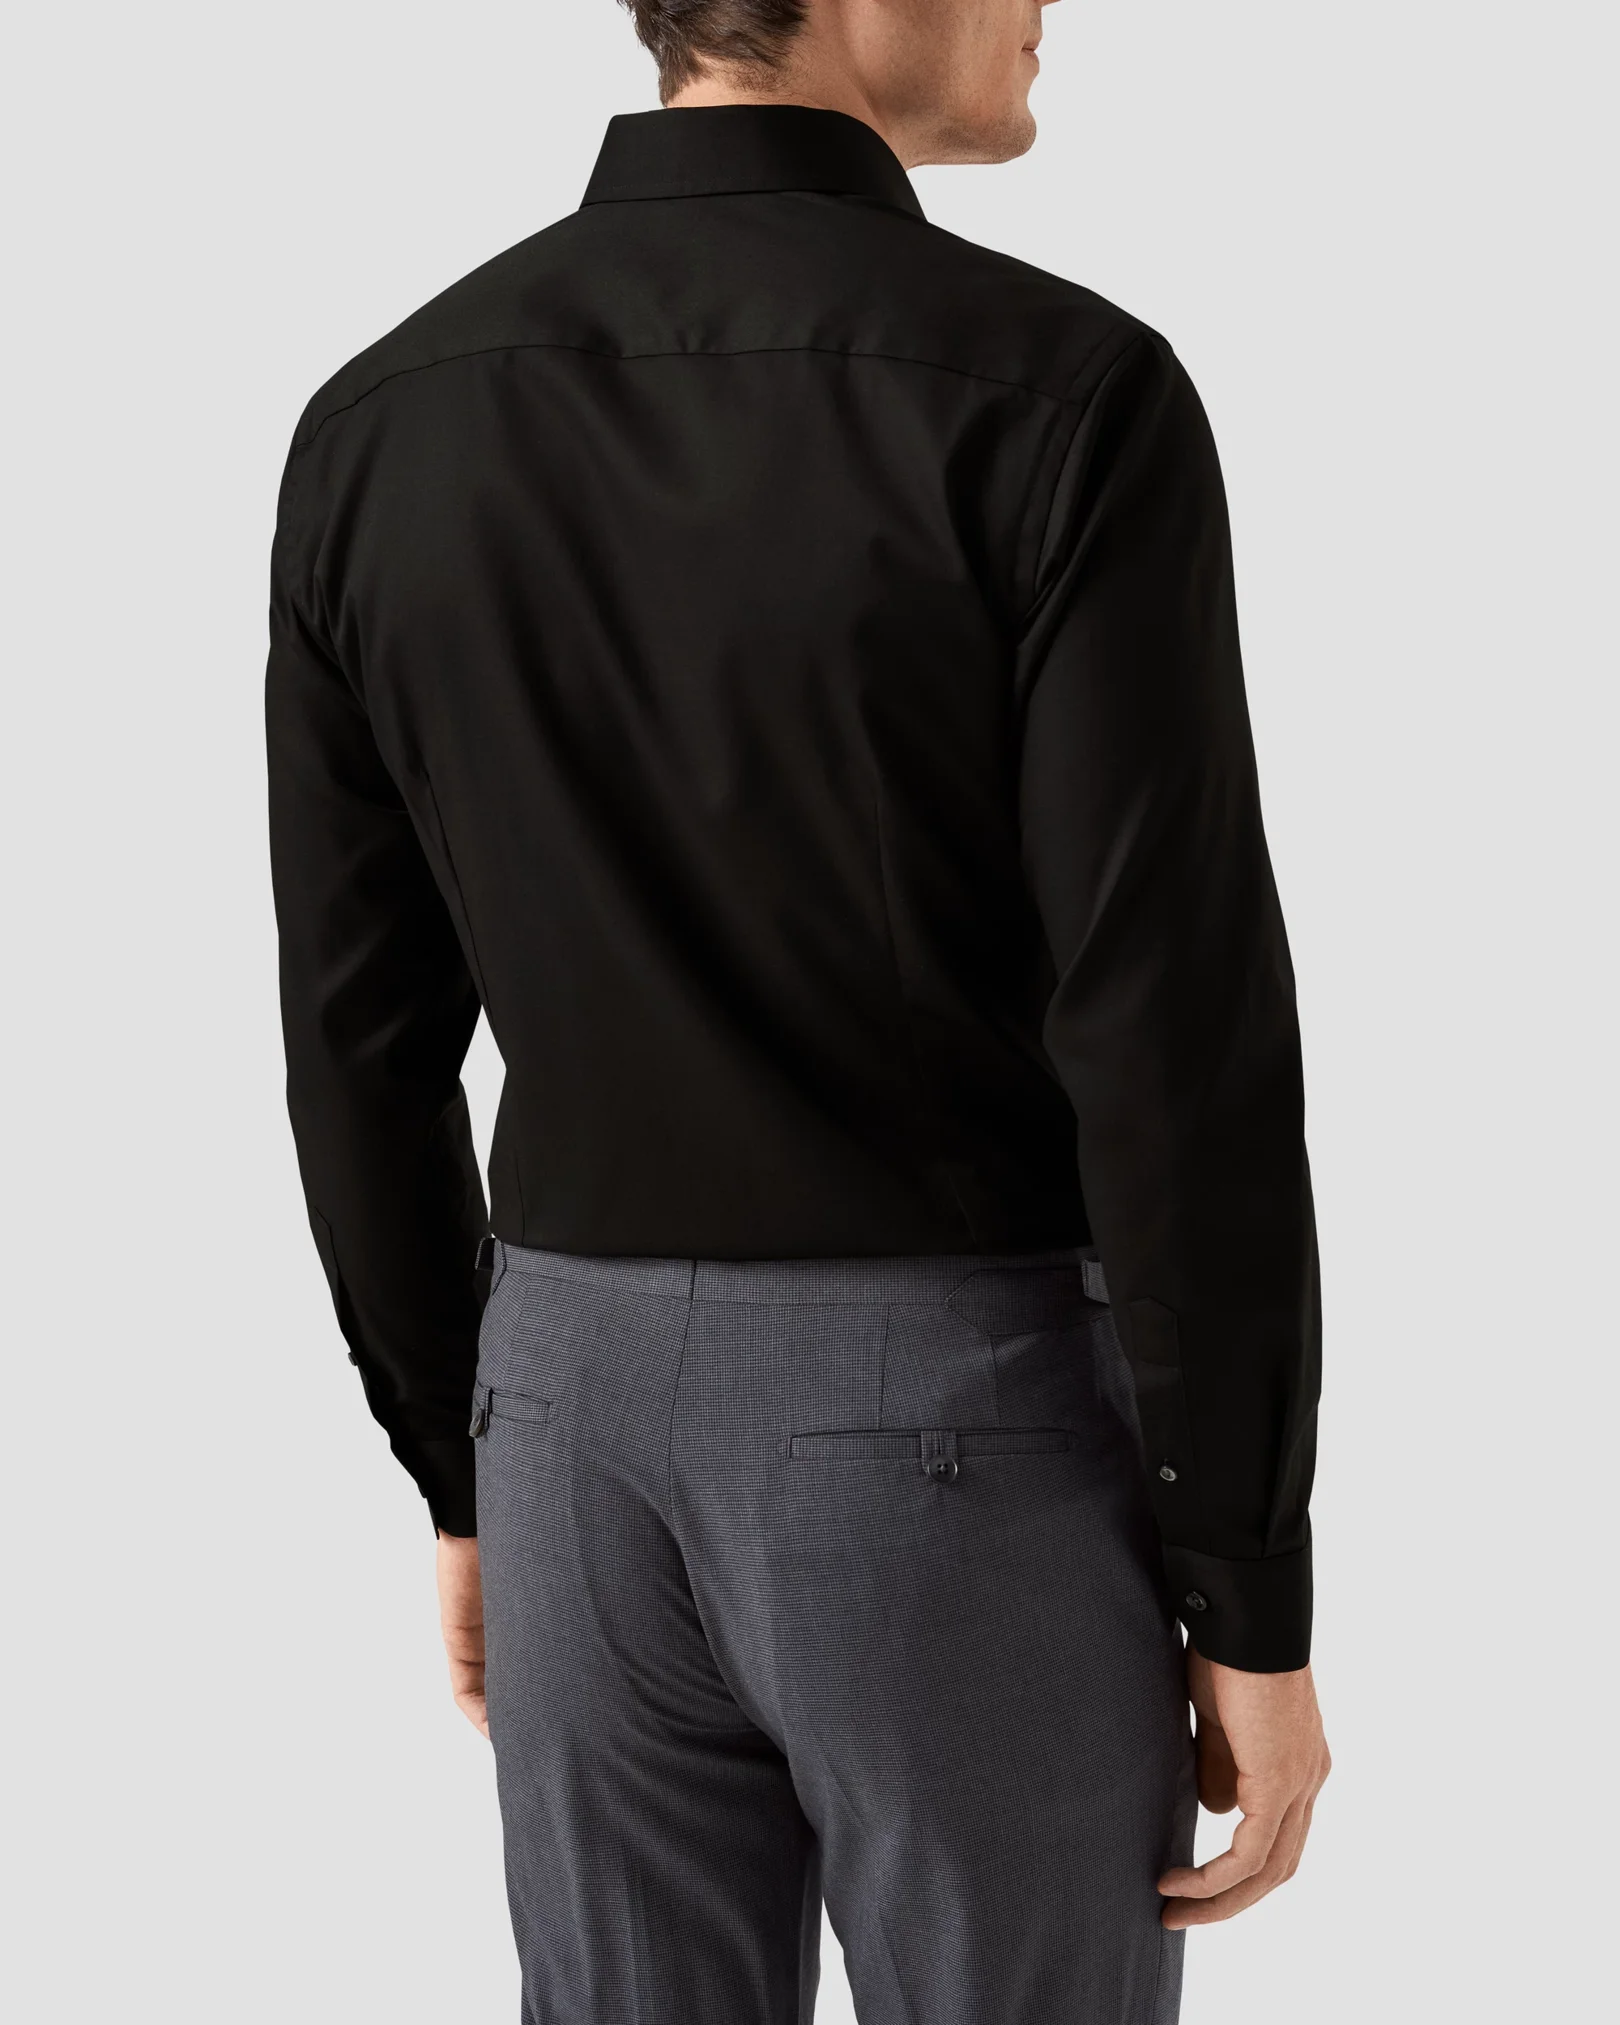 Eton - black shirt signature twill